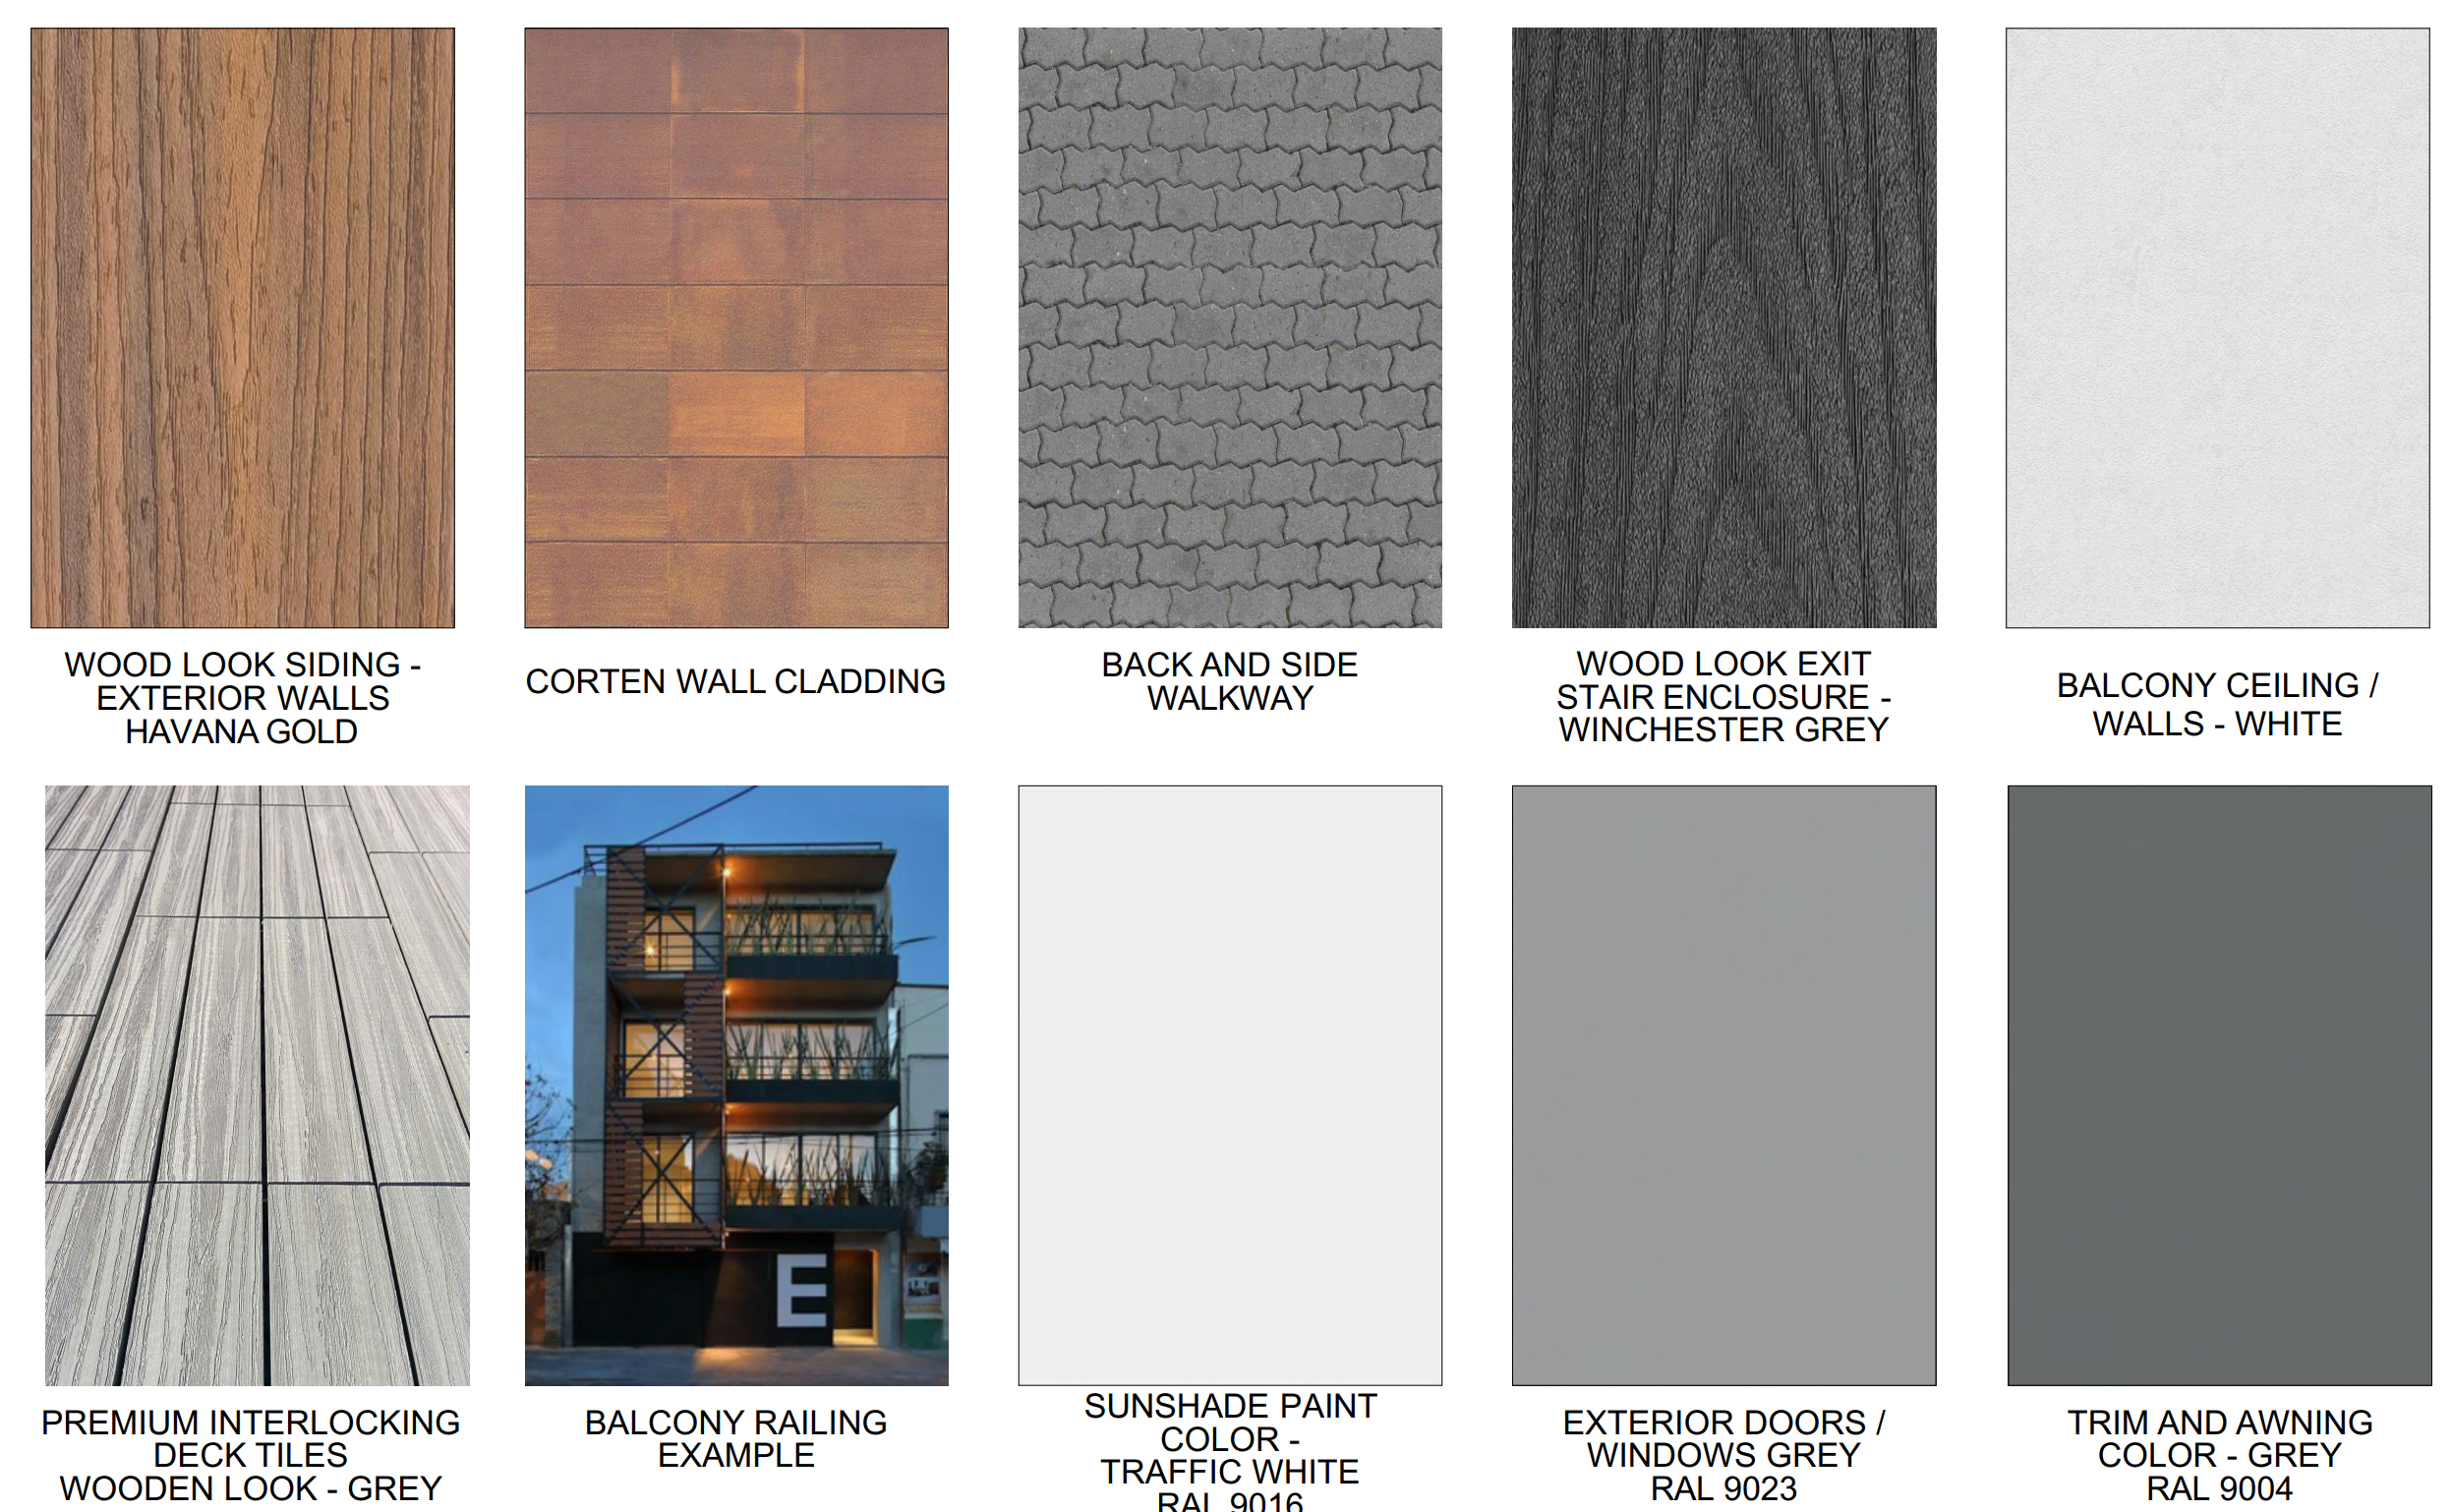 330 12th Street facade material collage, image courtesy the City of Sacramento